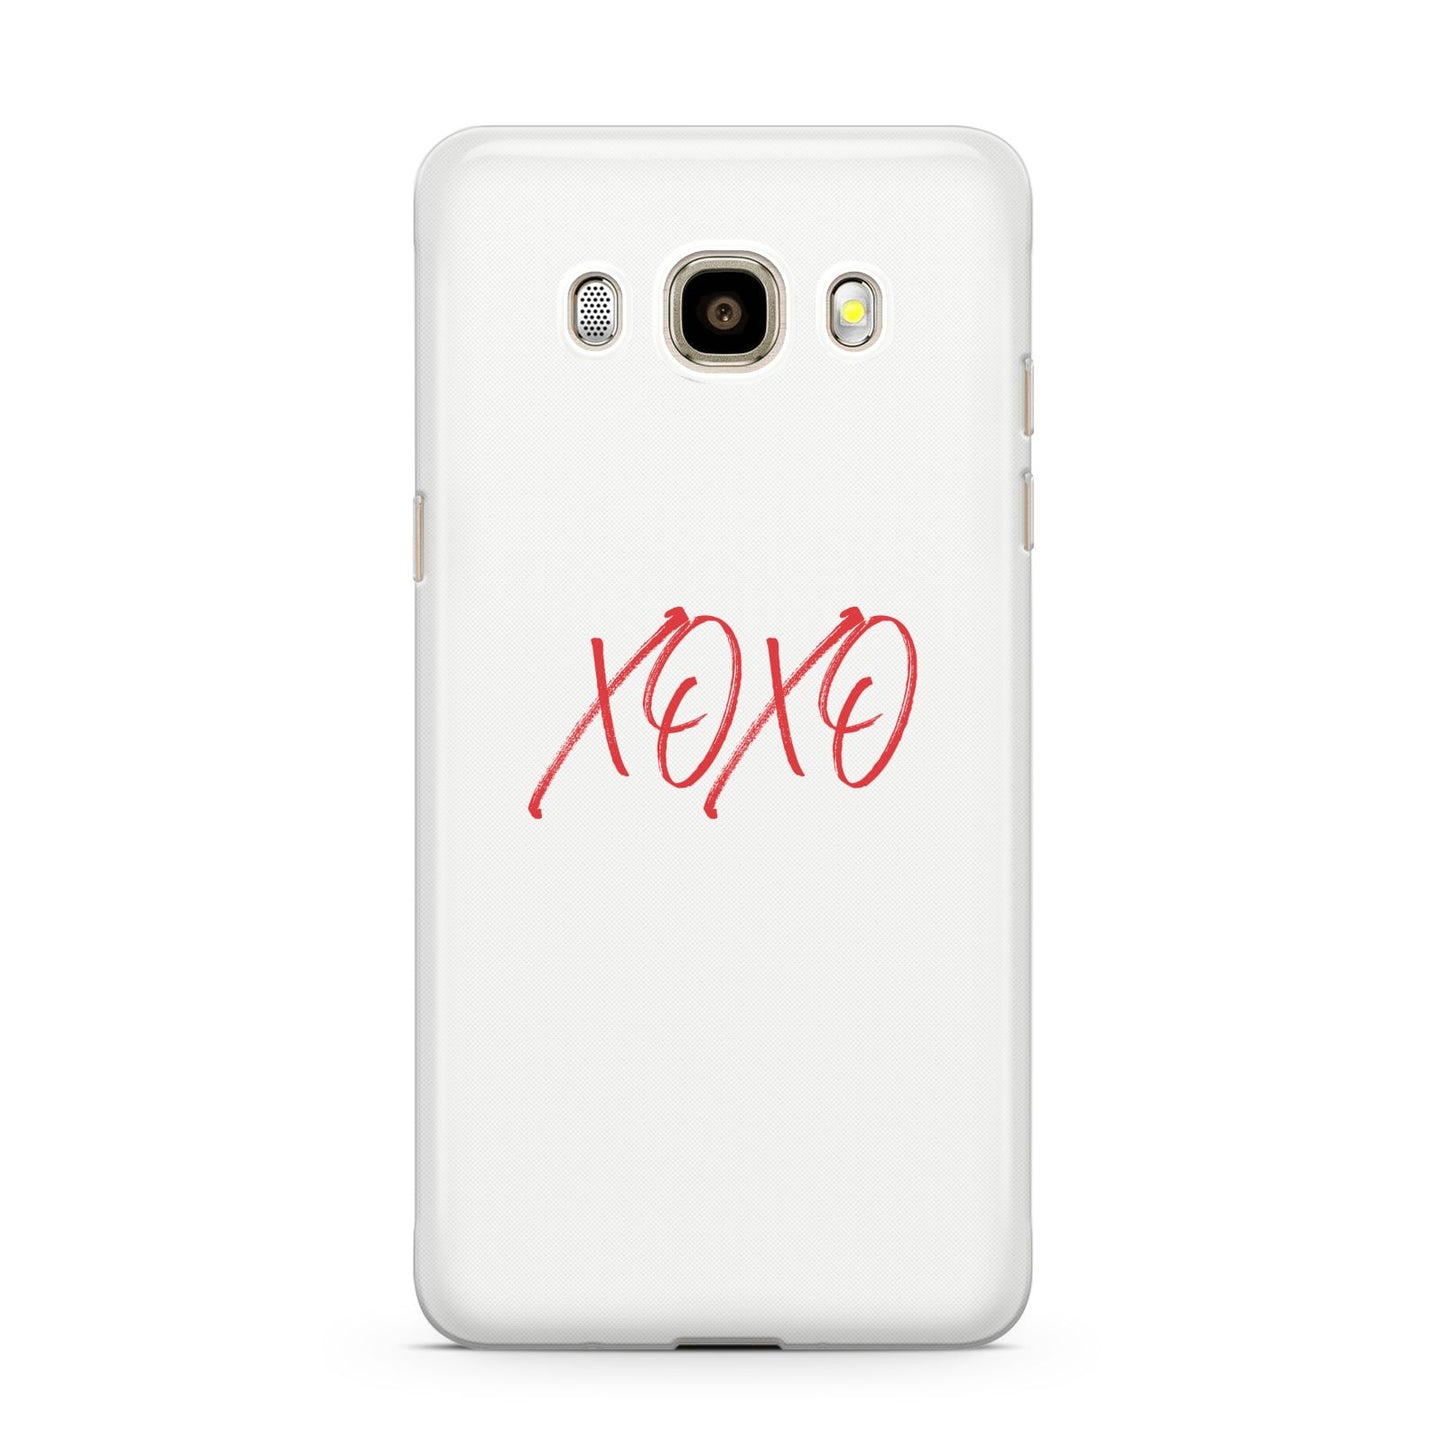 I love you like xo Samsung Galaxy J7 2016 Case on gold phone